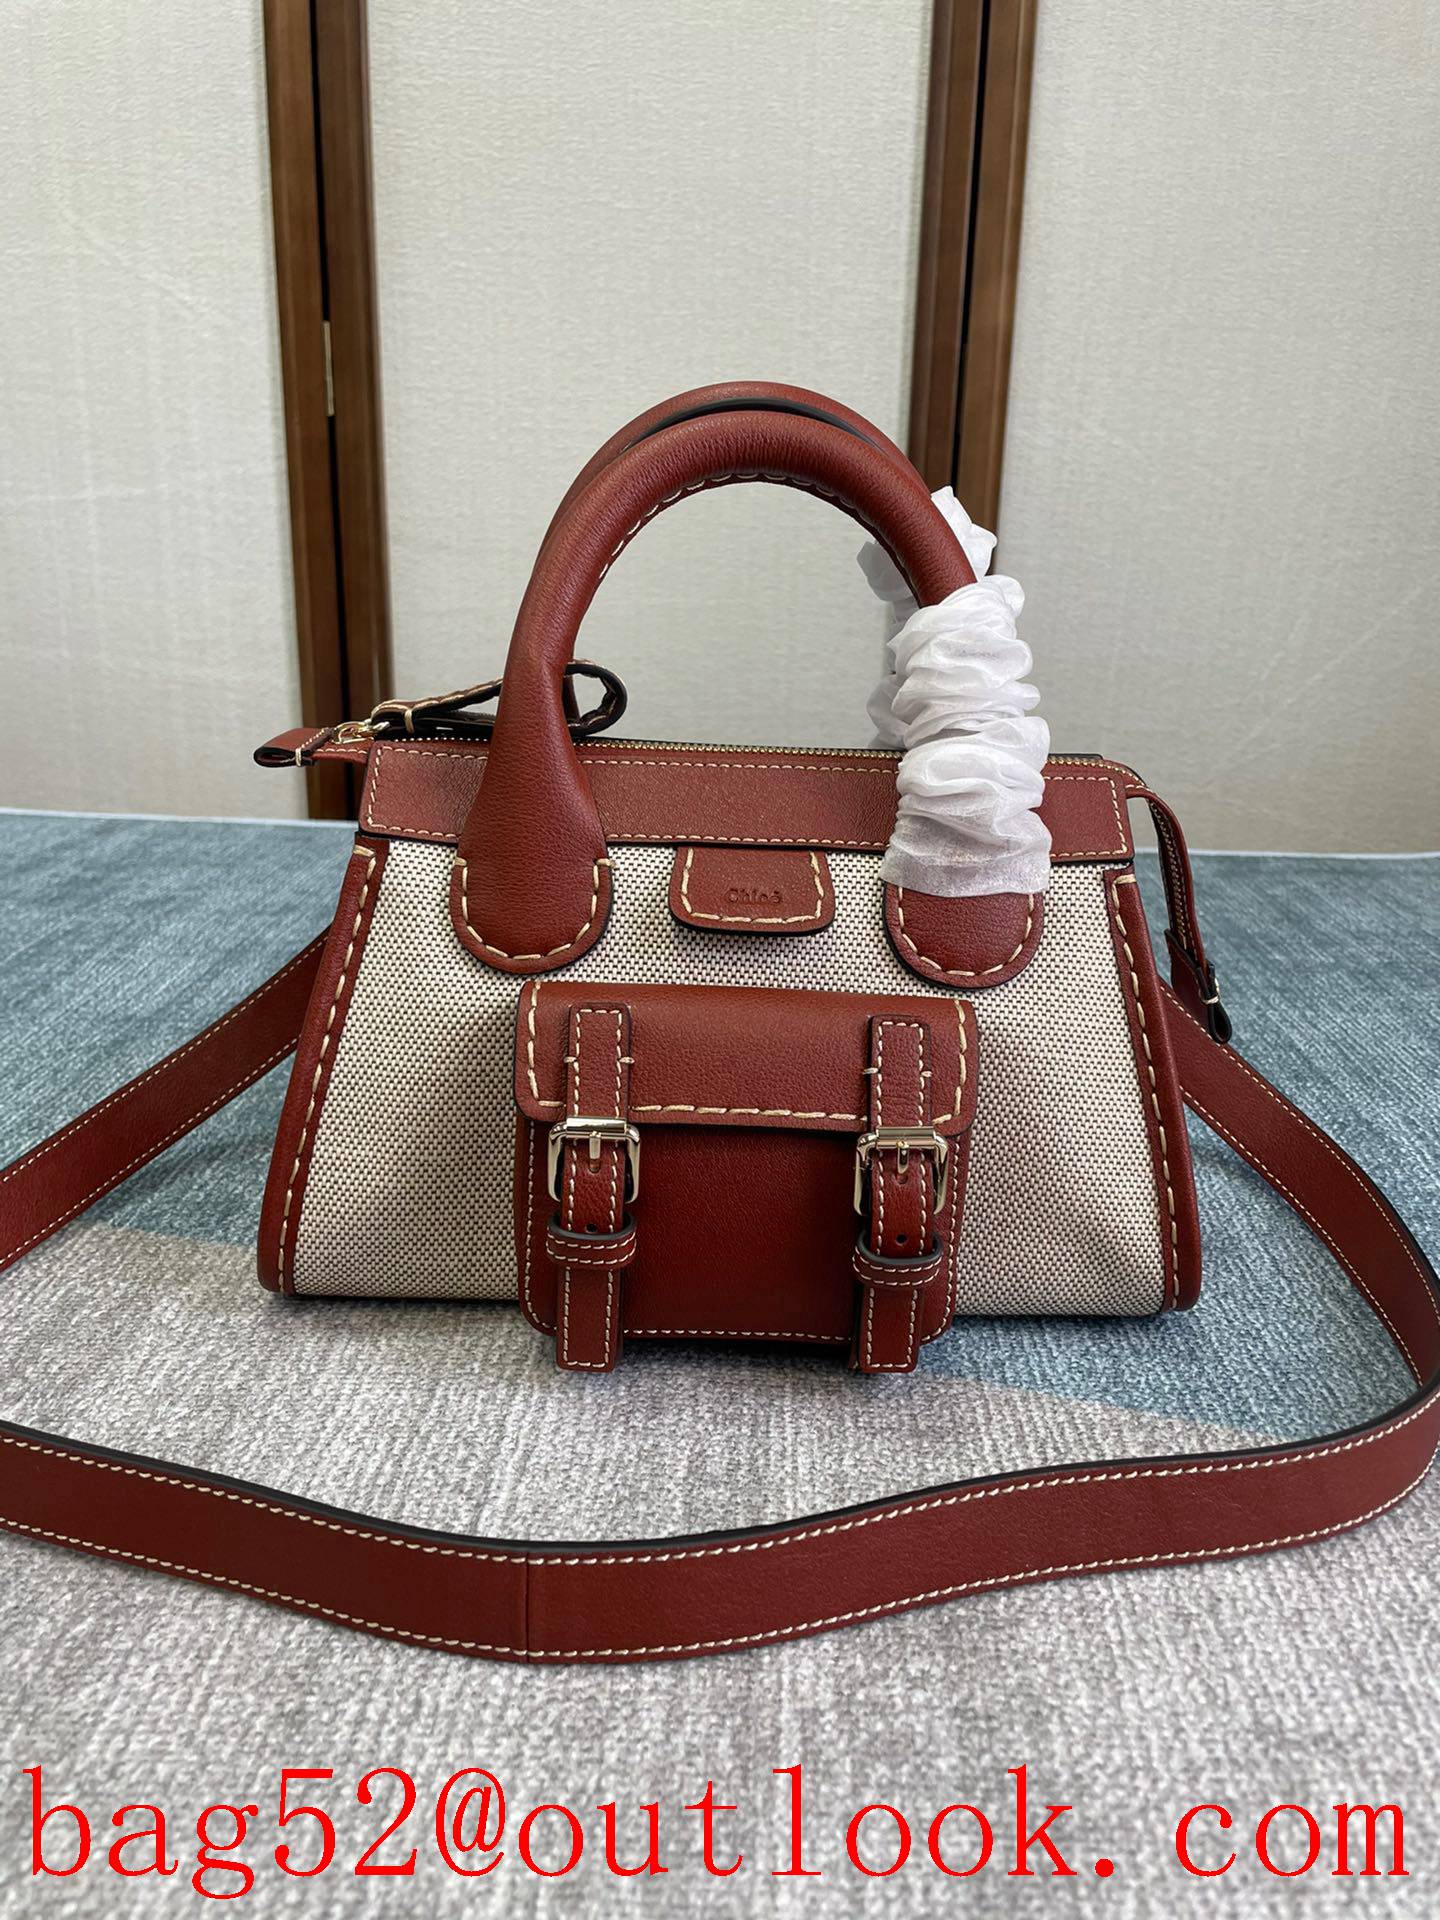 Chole Internal zip pocket Top zip closure Linen lining Removable strap handbag crossbody cream bag